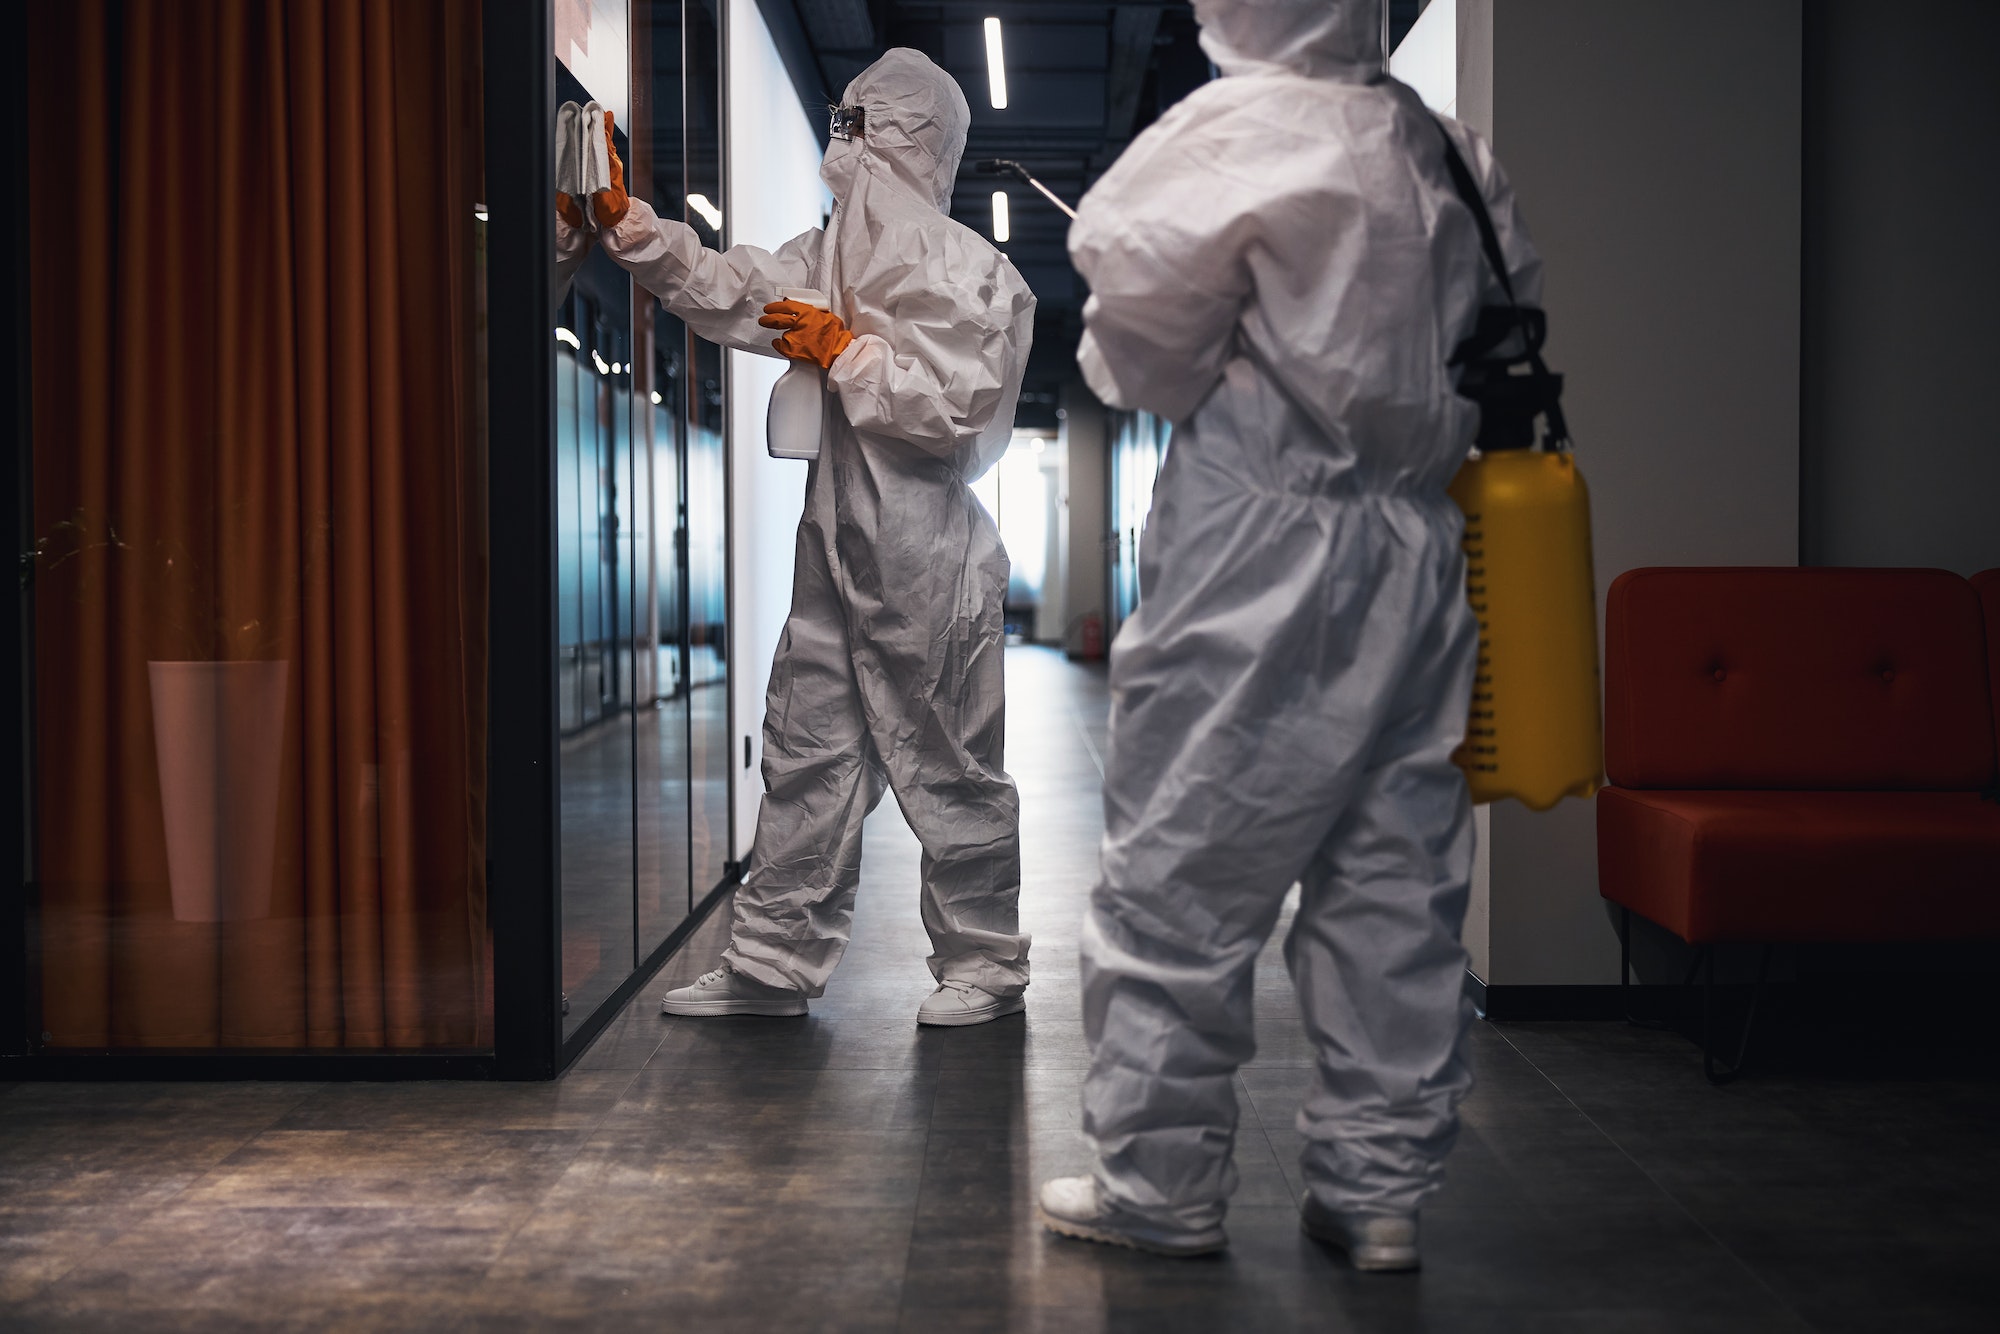 Two people in hazmat suits disinfecting the office corridor